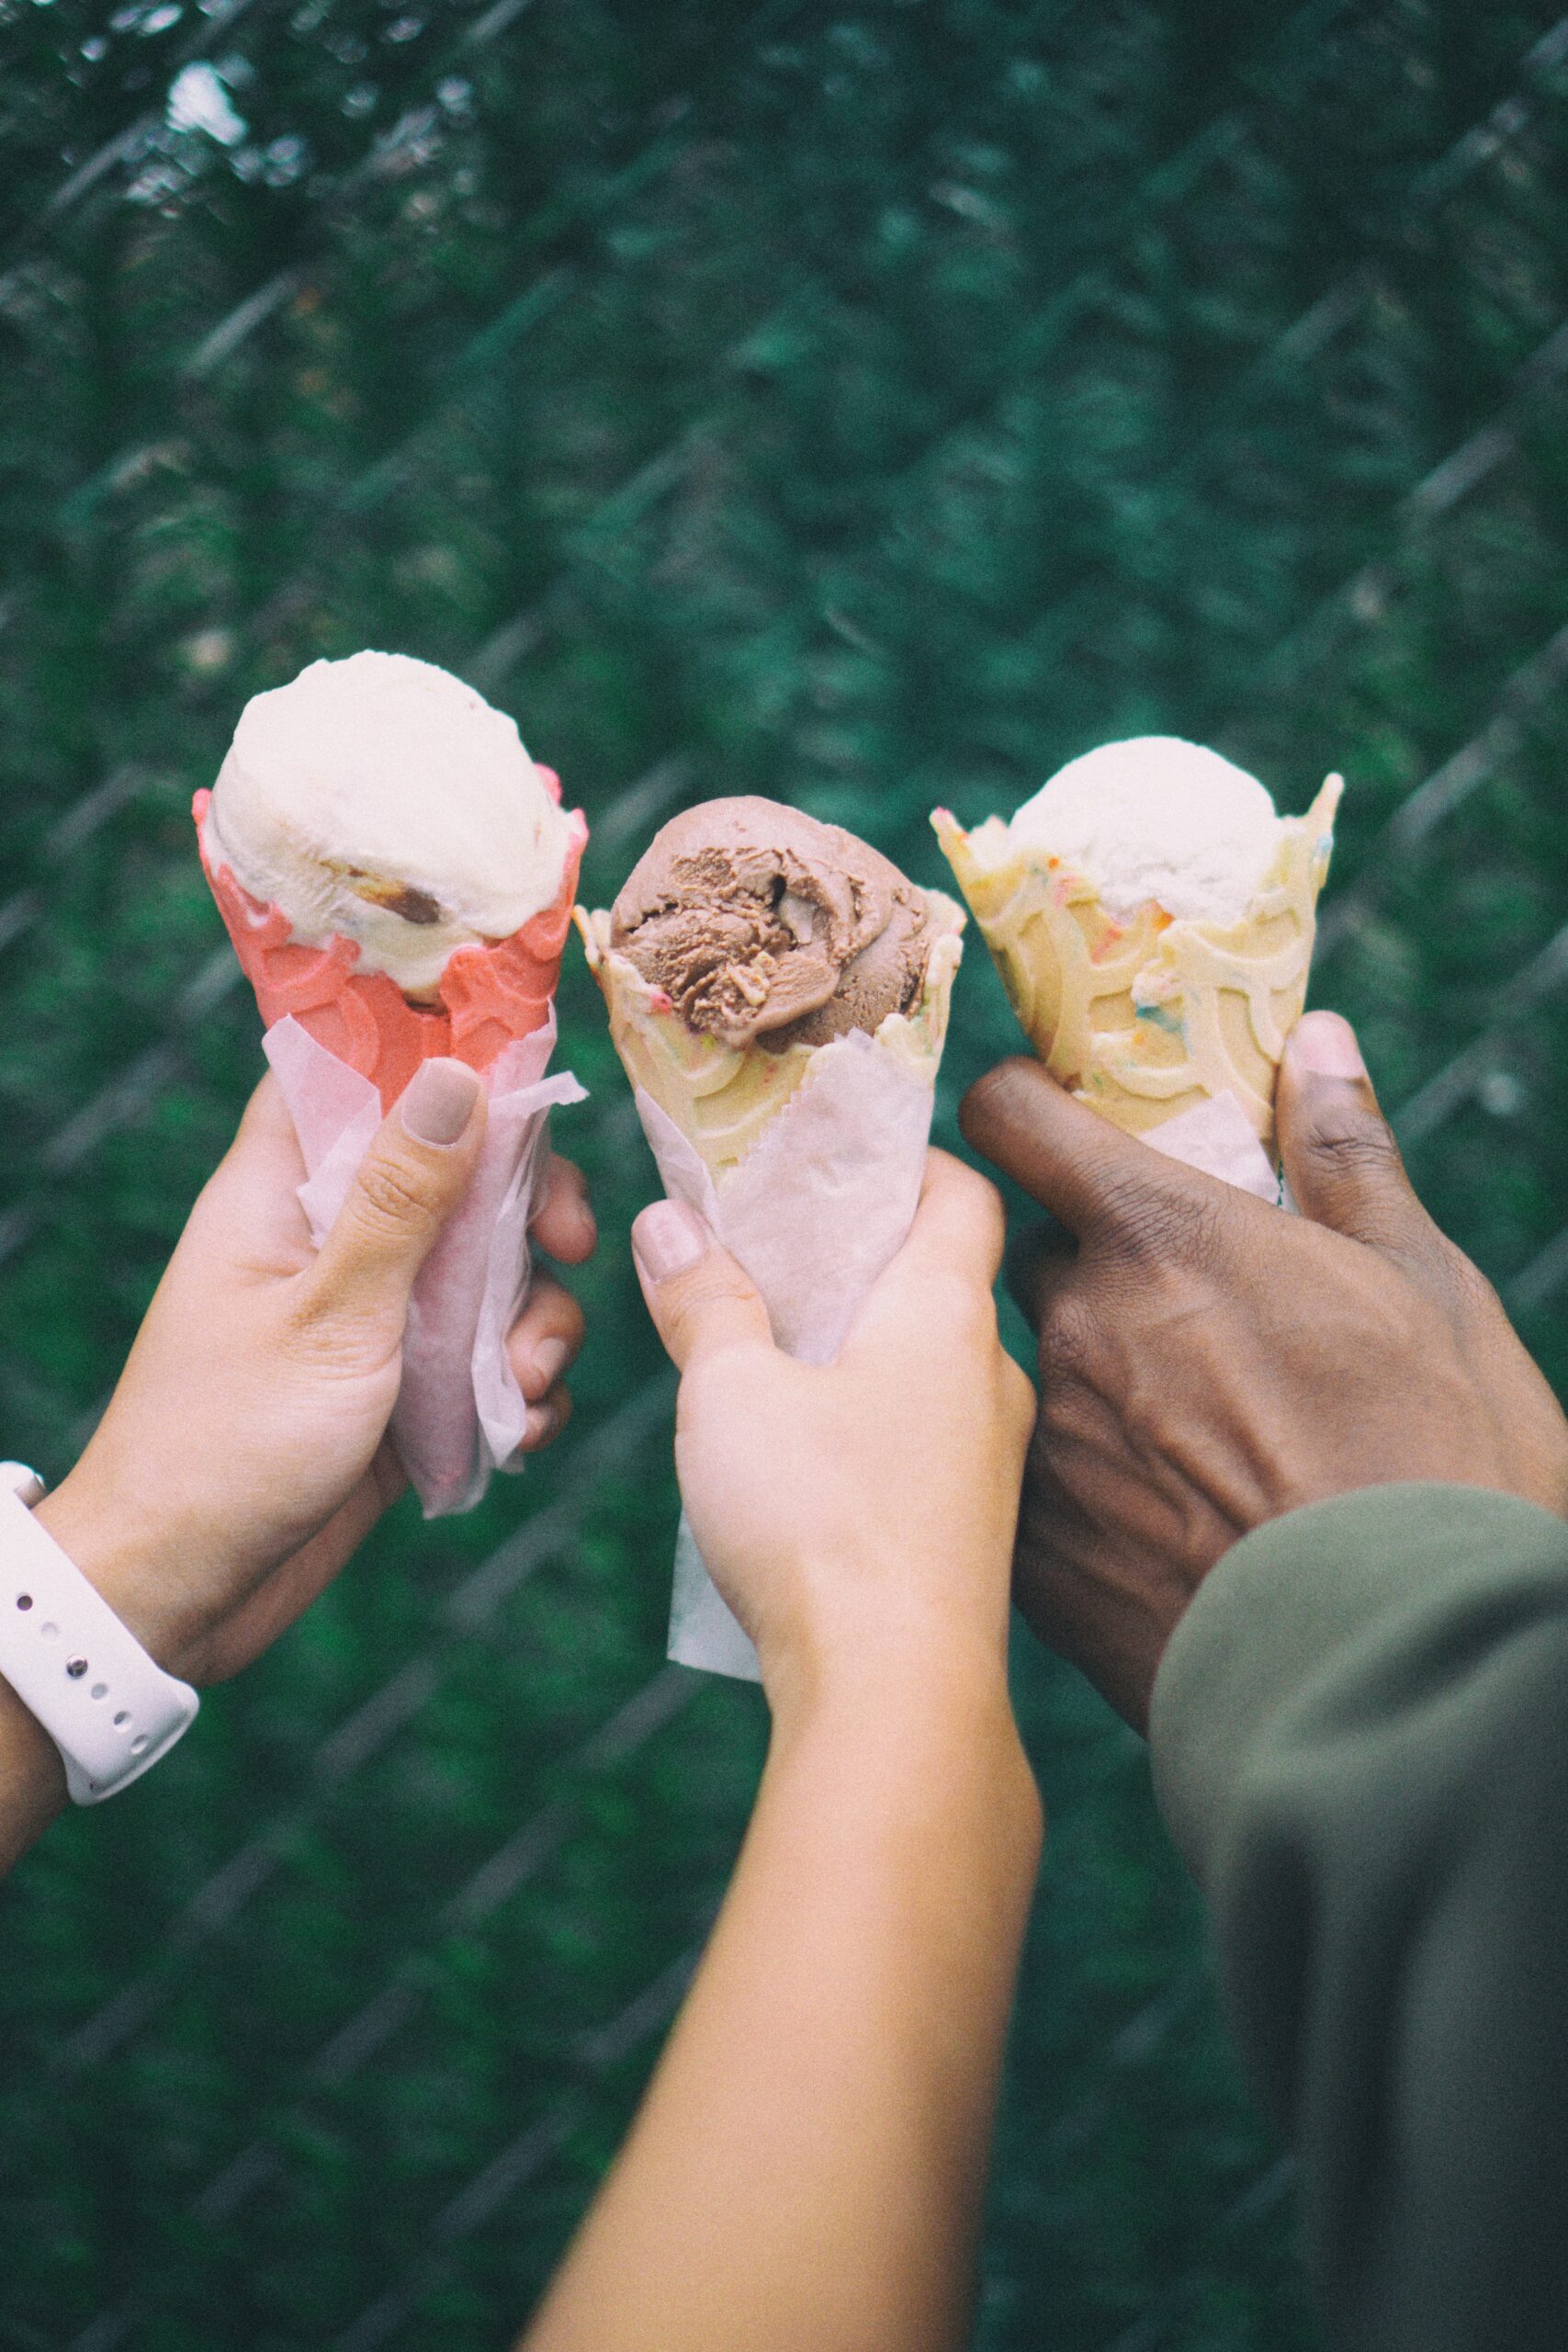 three hands holding three ice cream cones